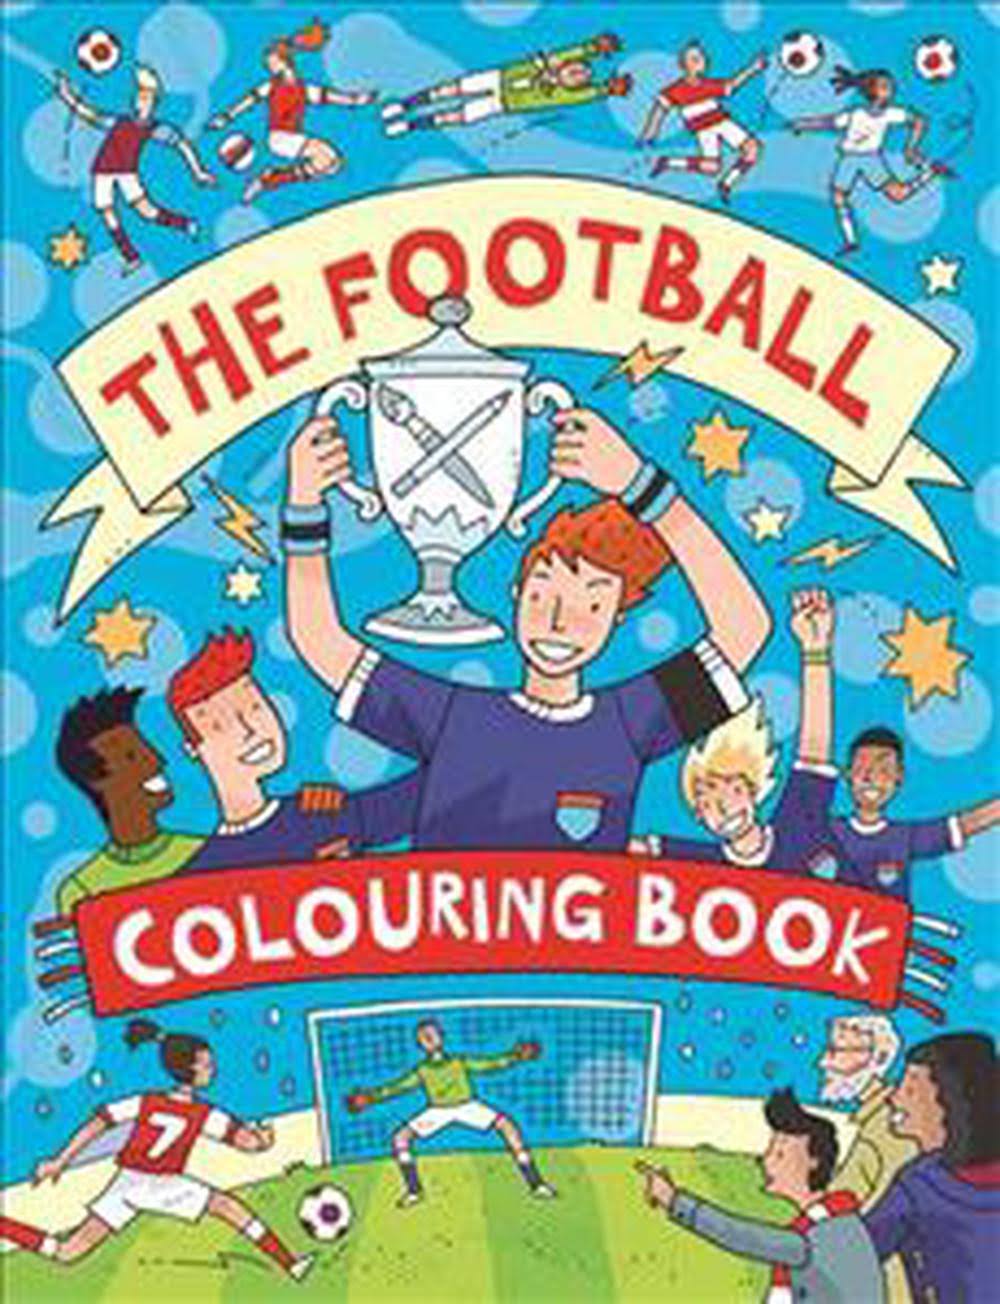 The Football Colouring Book [Book]